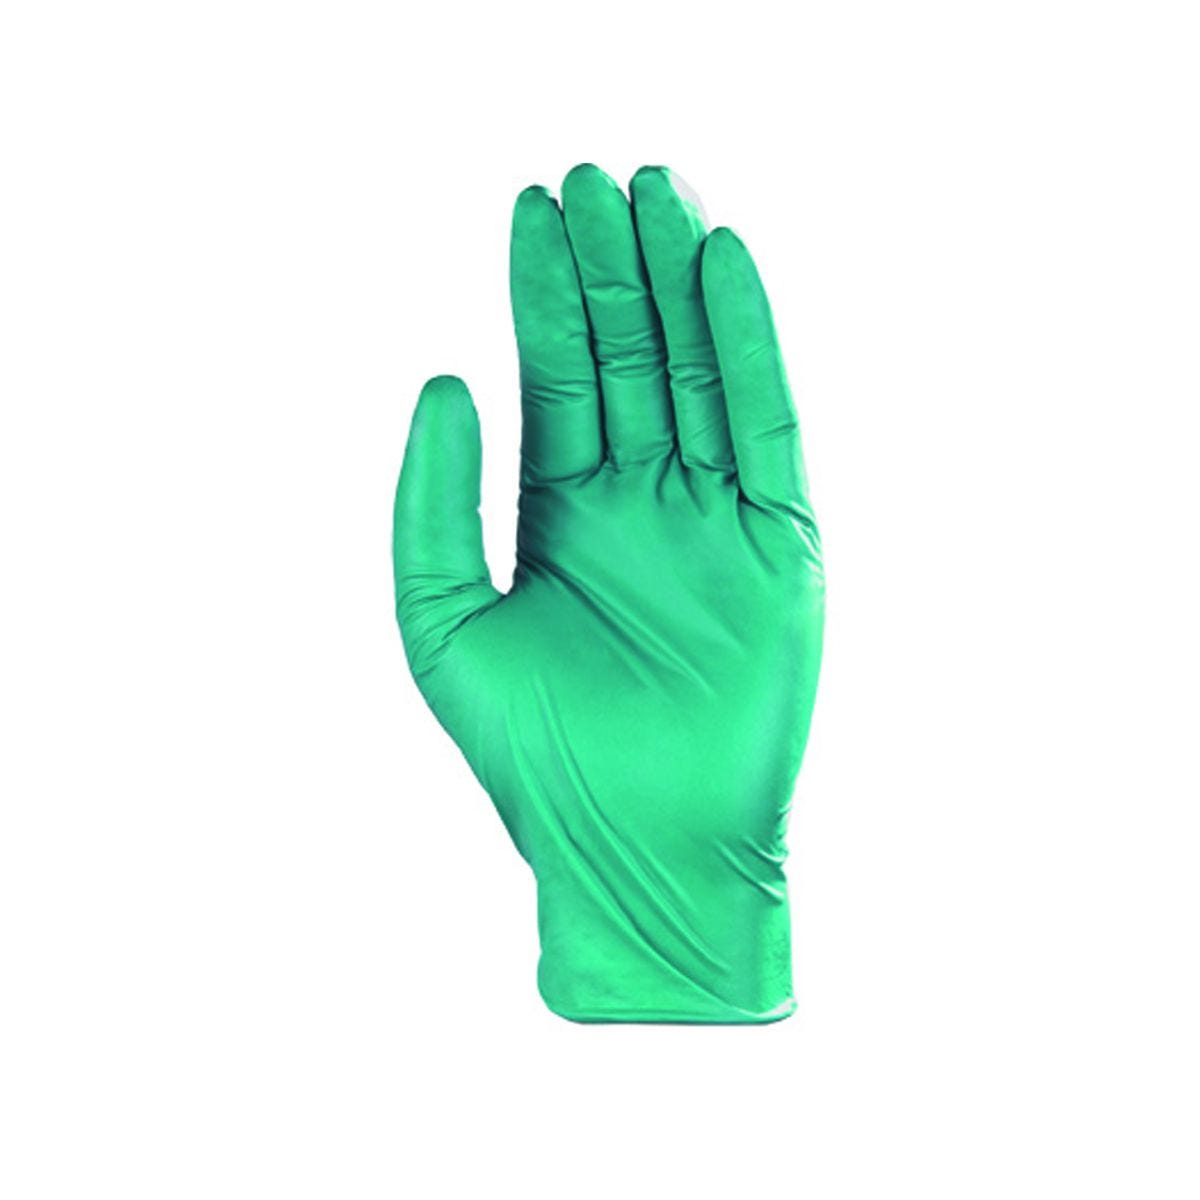 Gants nitrile vert (boîte de 100 gants) - COVERGUARD - Taille L-9 0